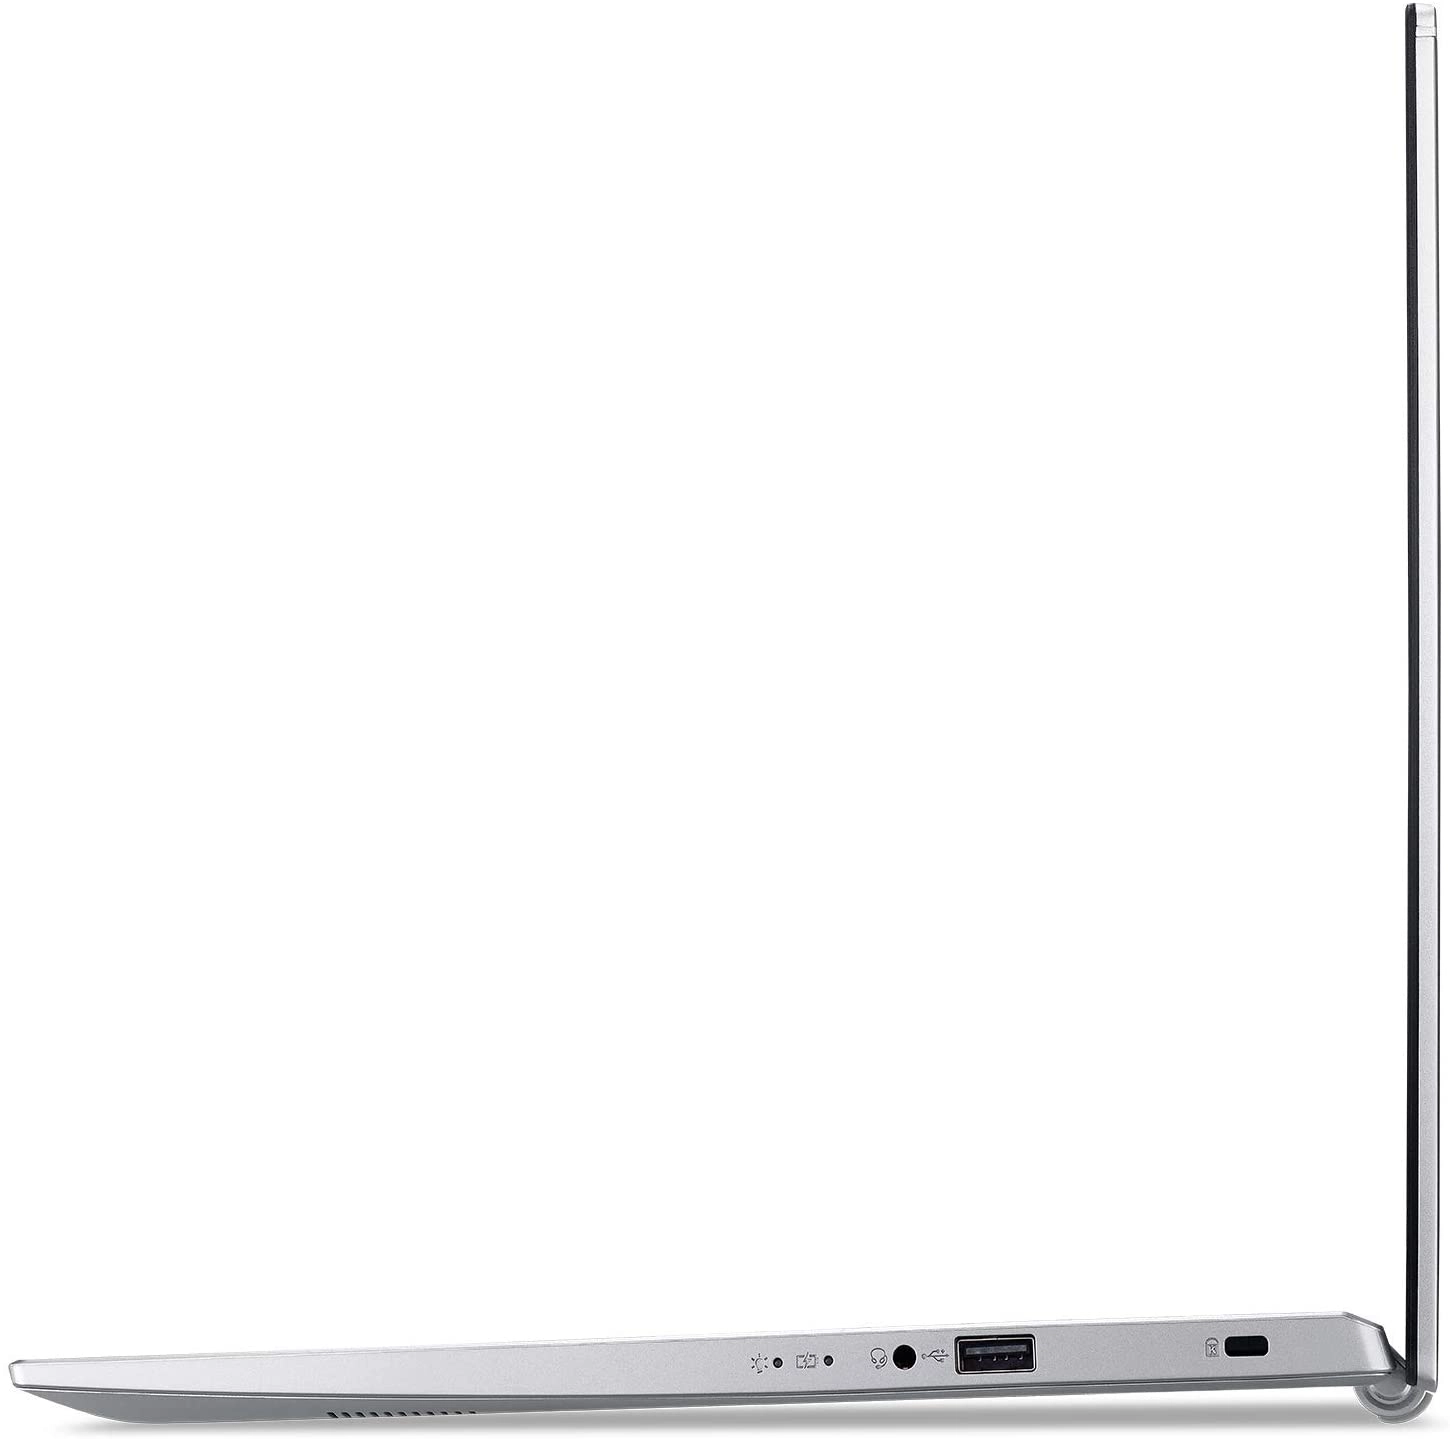 Acer A515-56 laptop image